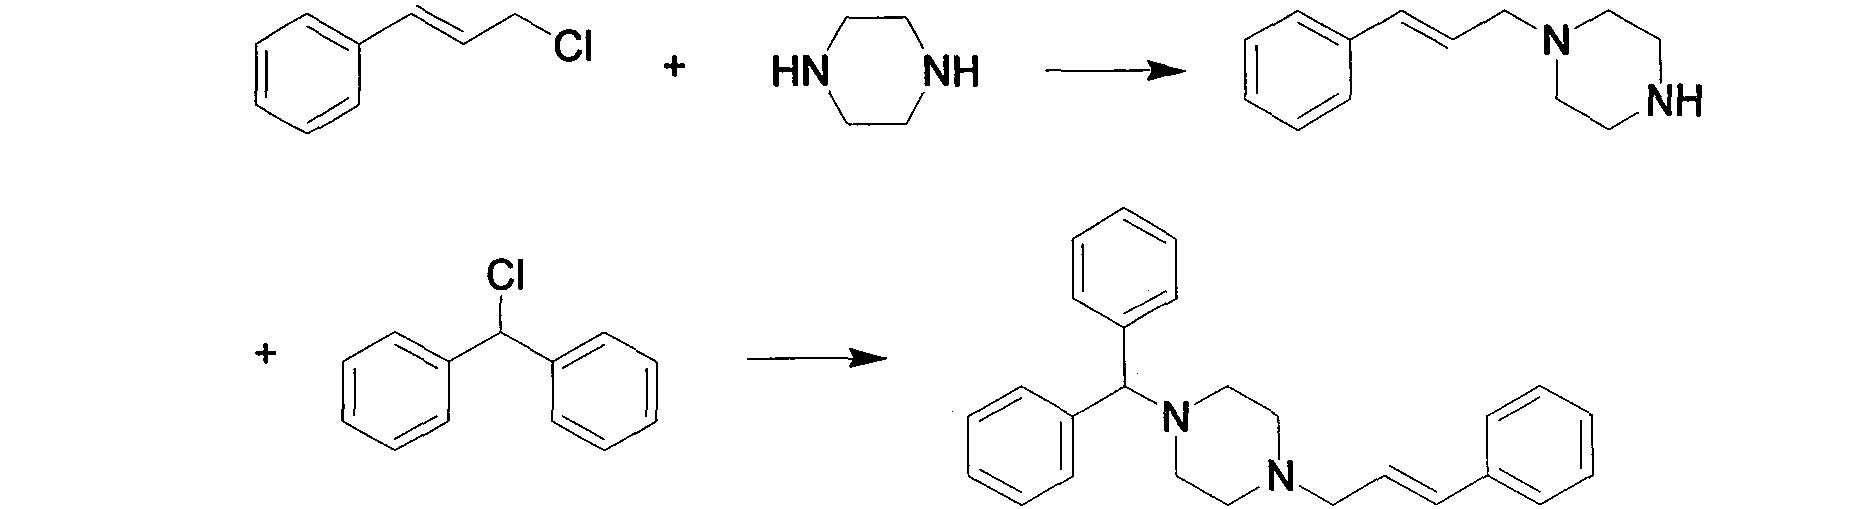 New synthesis method of cinnarizine